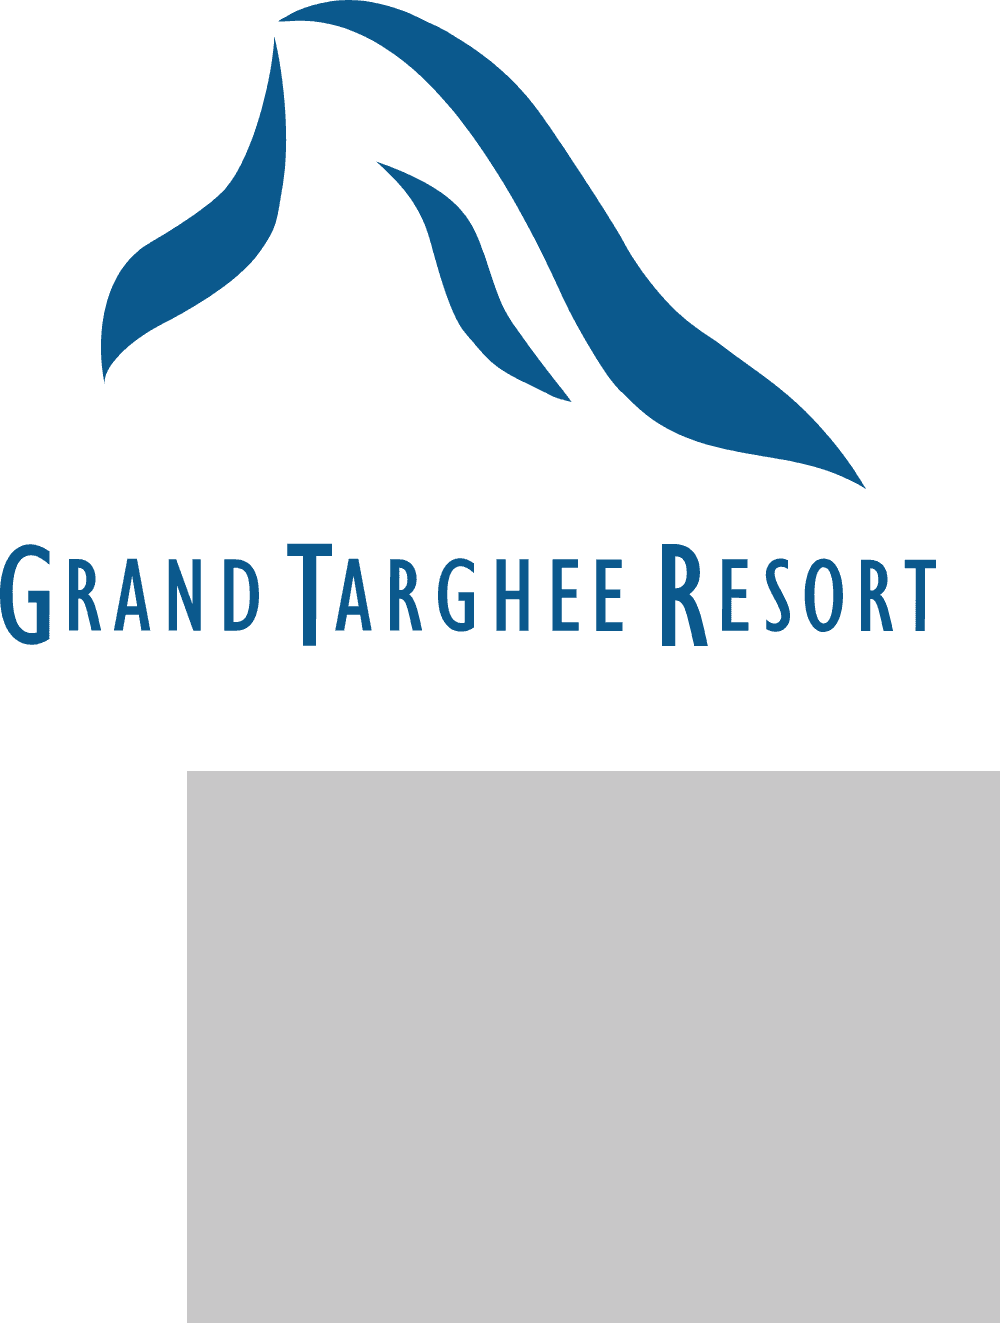 Grand Targhee Resort Logo download